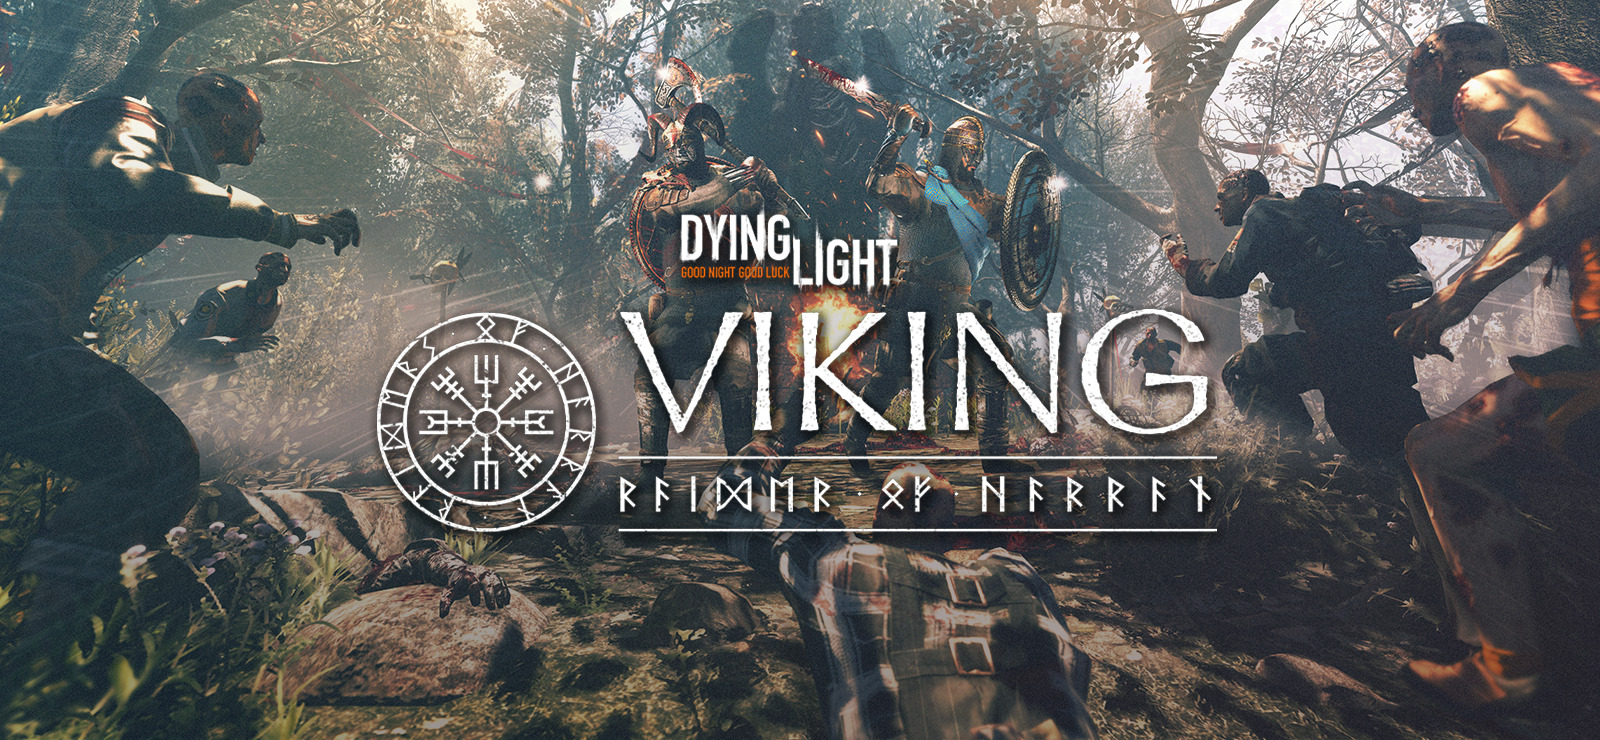 Dying Light - Viking: Raider of Harran Bundle на GOG.com